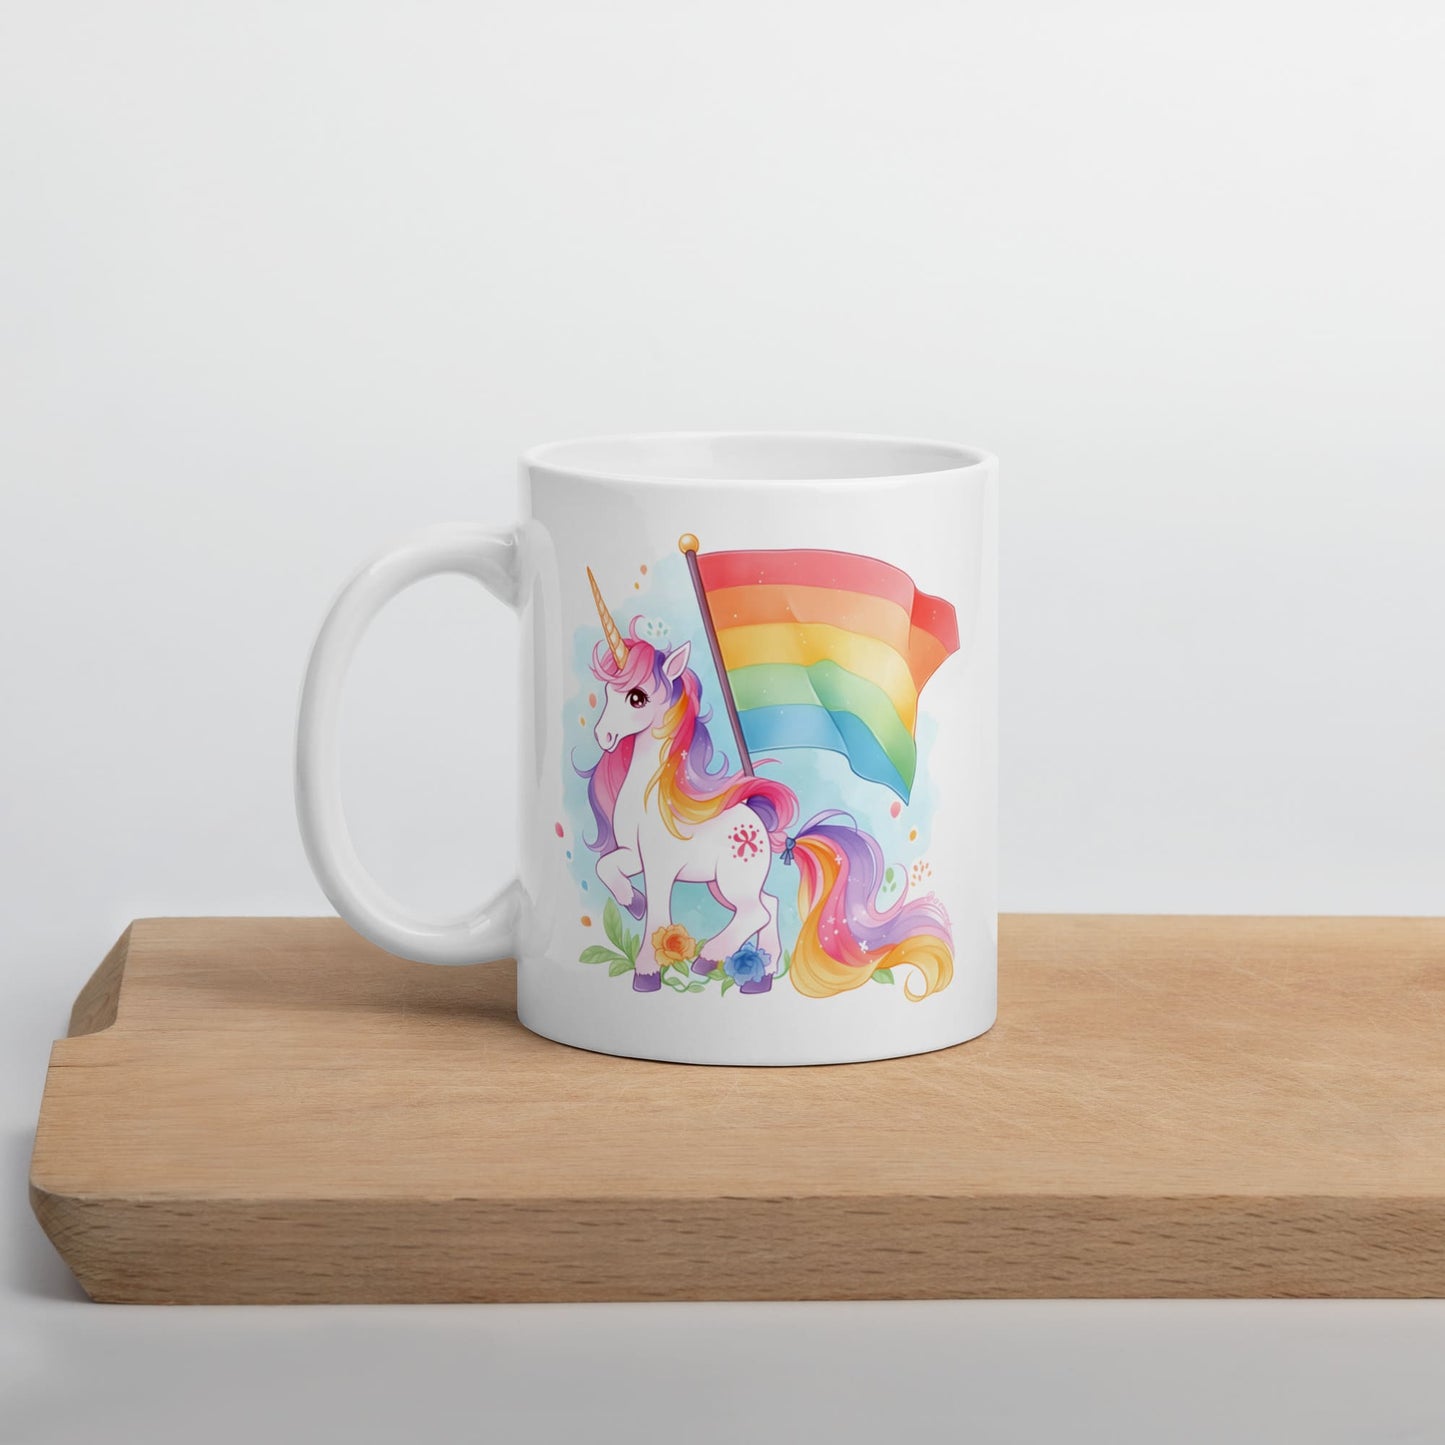 LGBTQ mug, cute rainbow unicorn coffee or tea cup on table